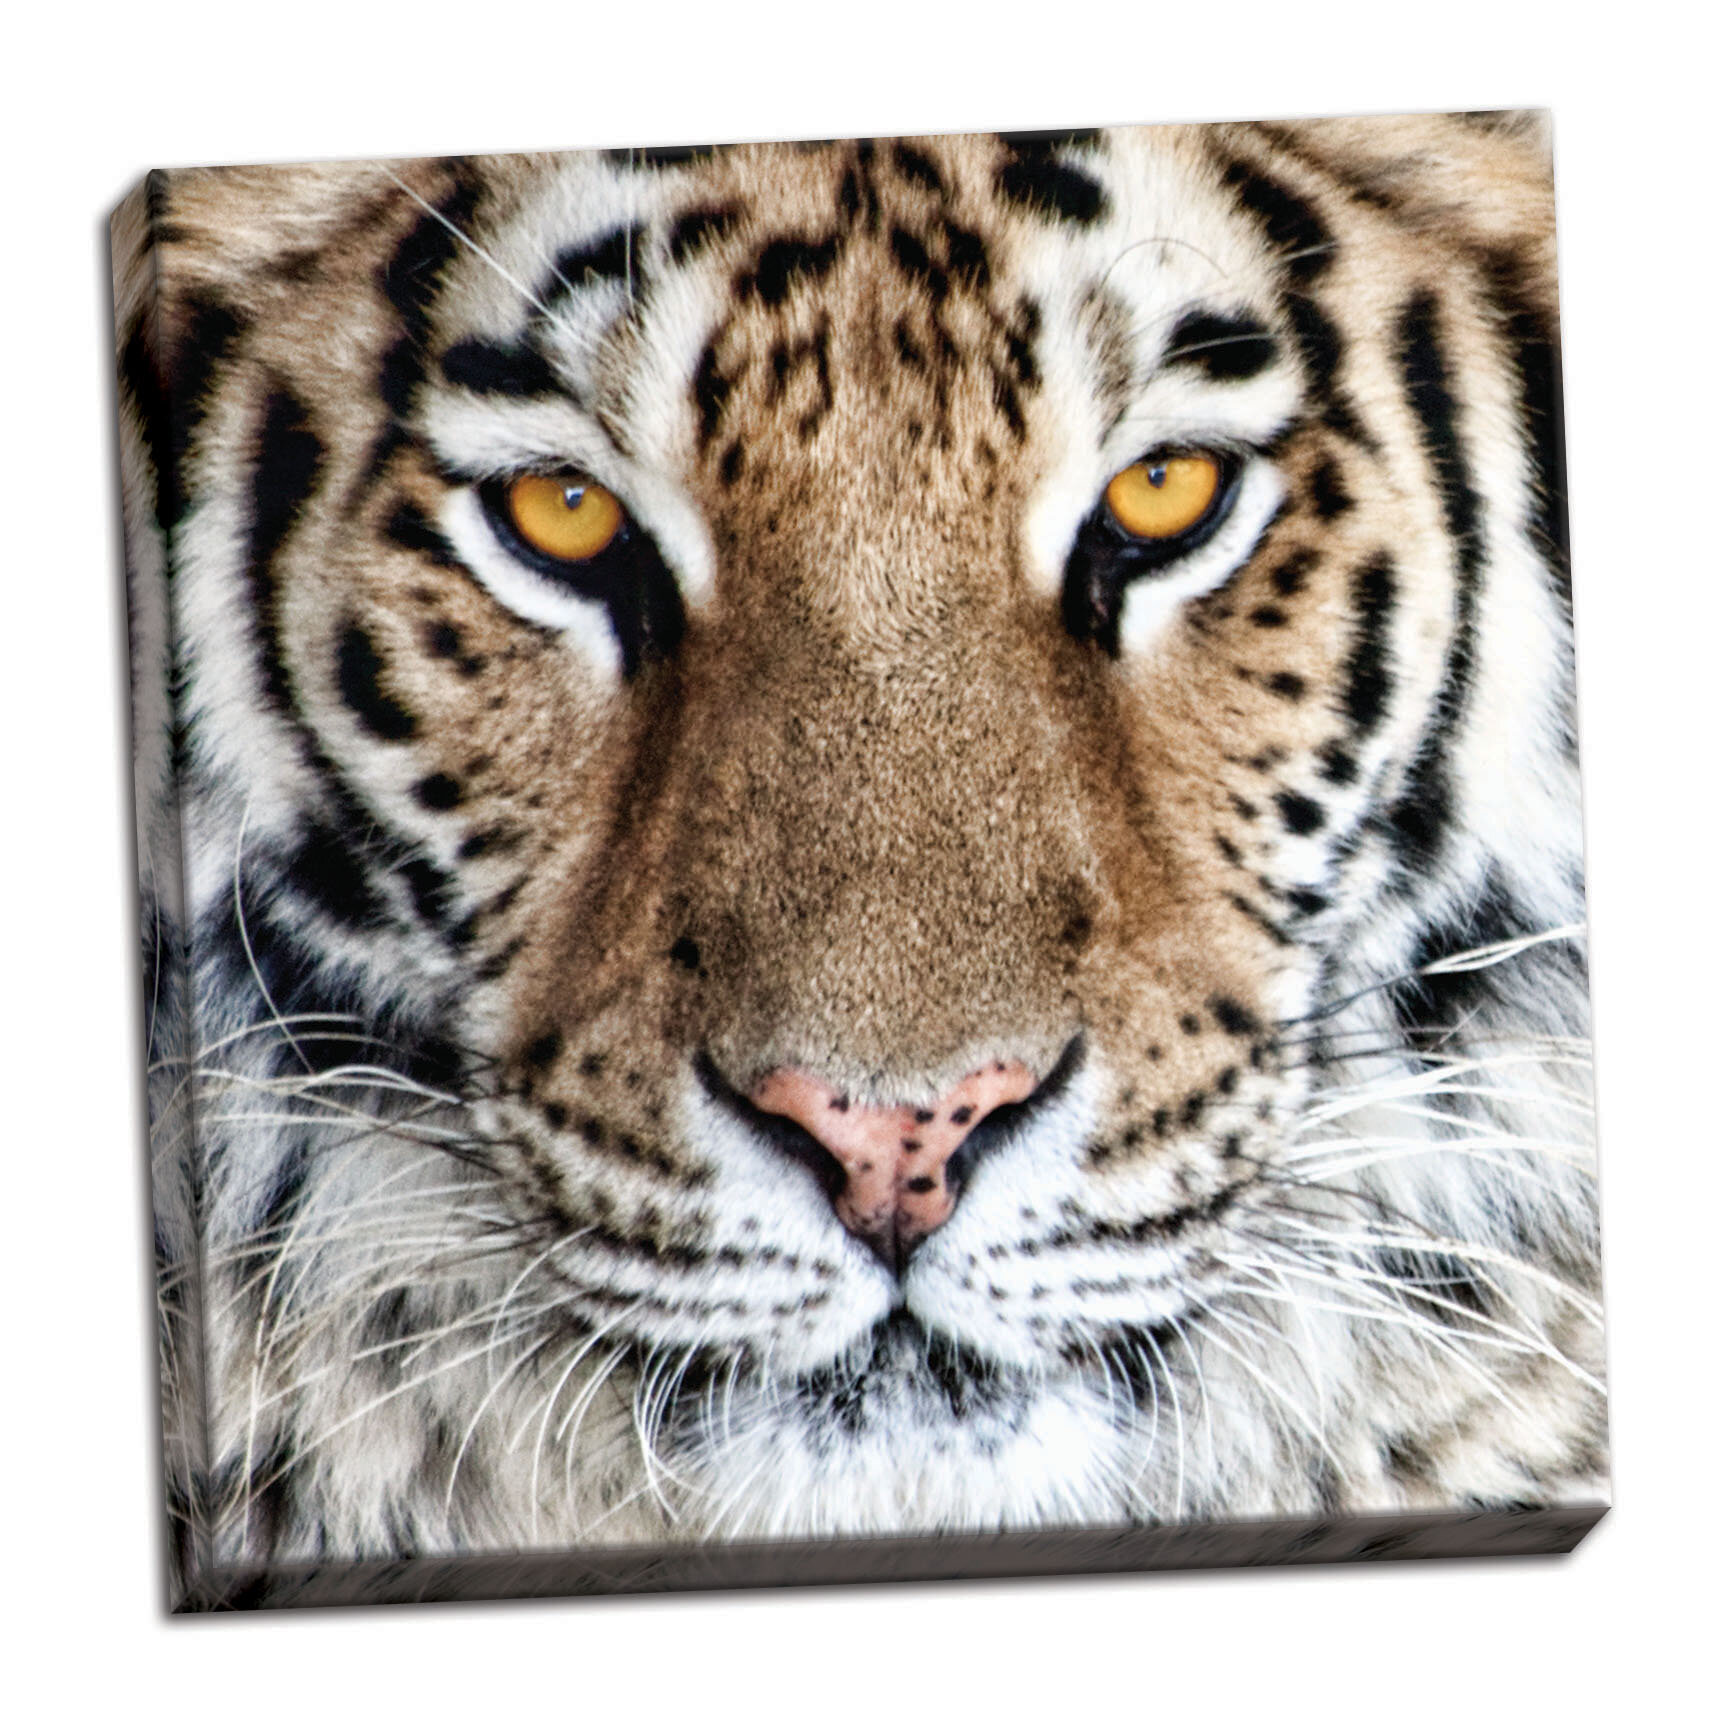 images of tiger eyes